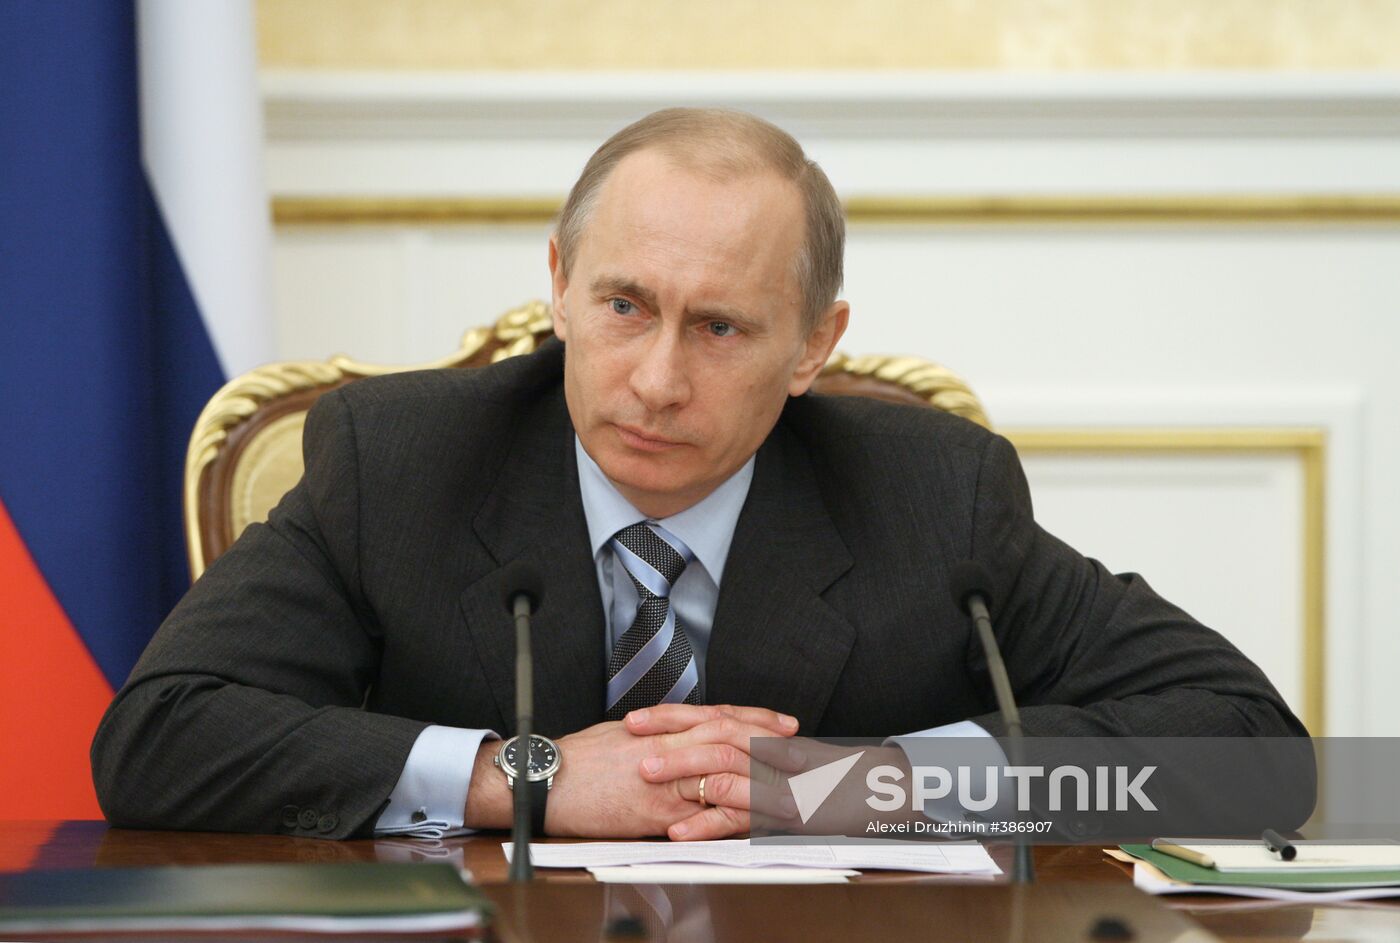 Vladimir Putin chairing meeting of the Government's Presidium